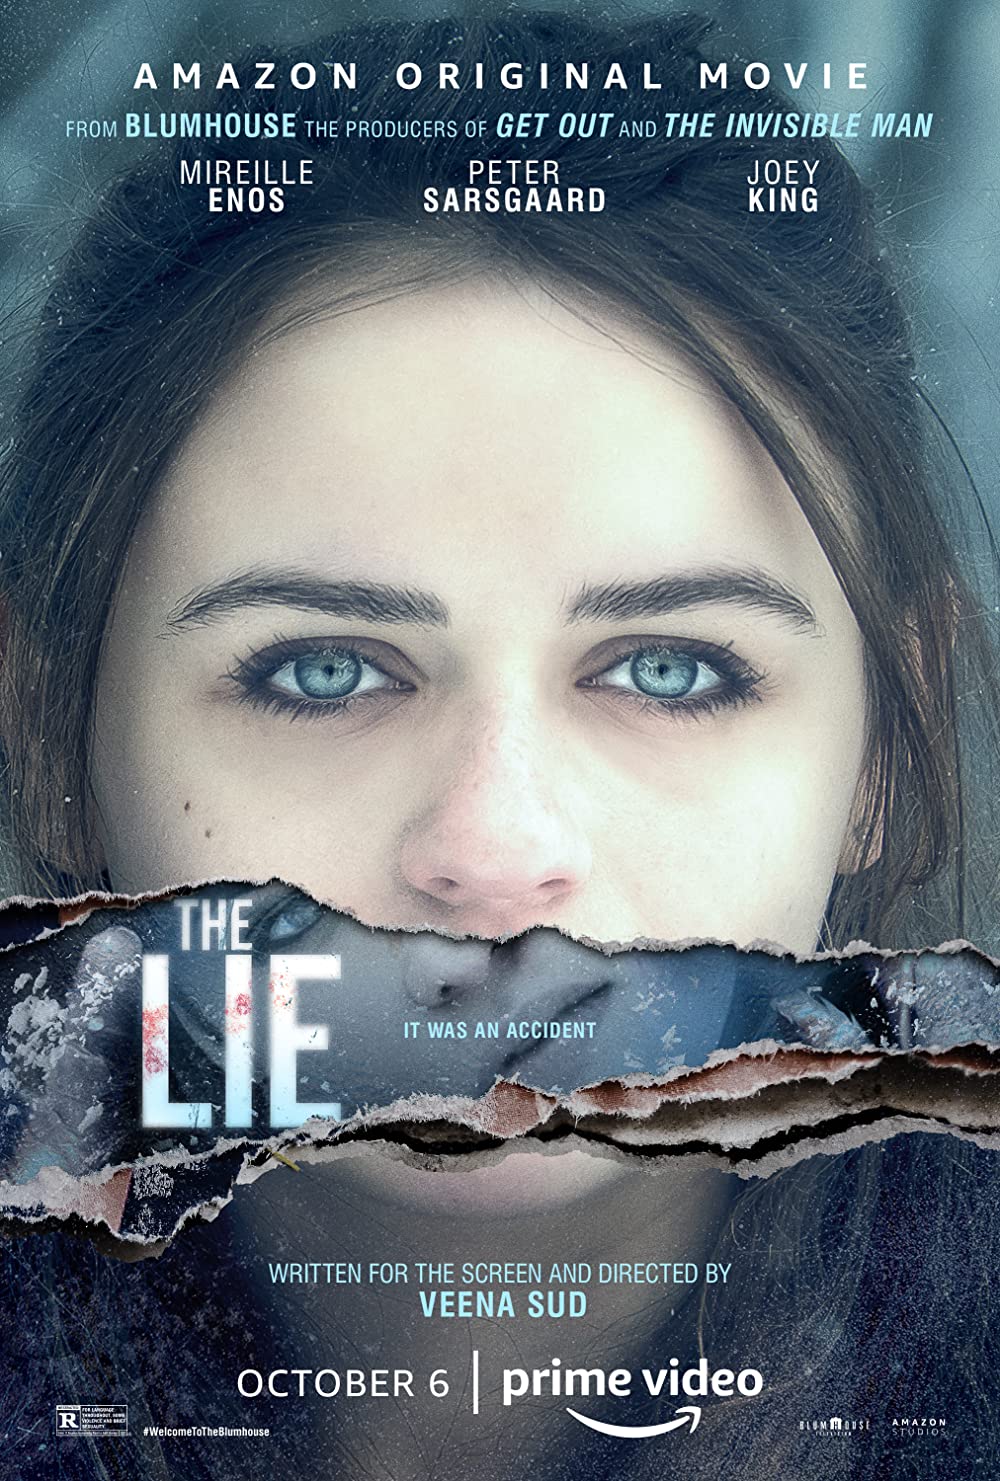 Filmbeschreibung zu The Lie